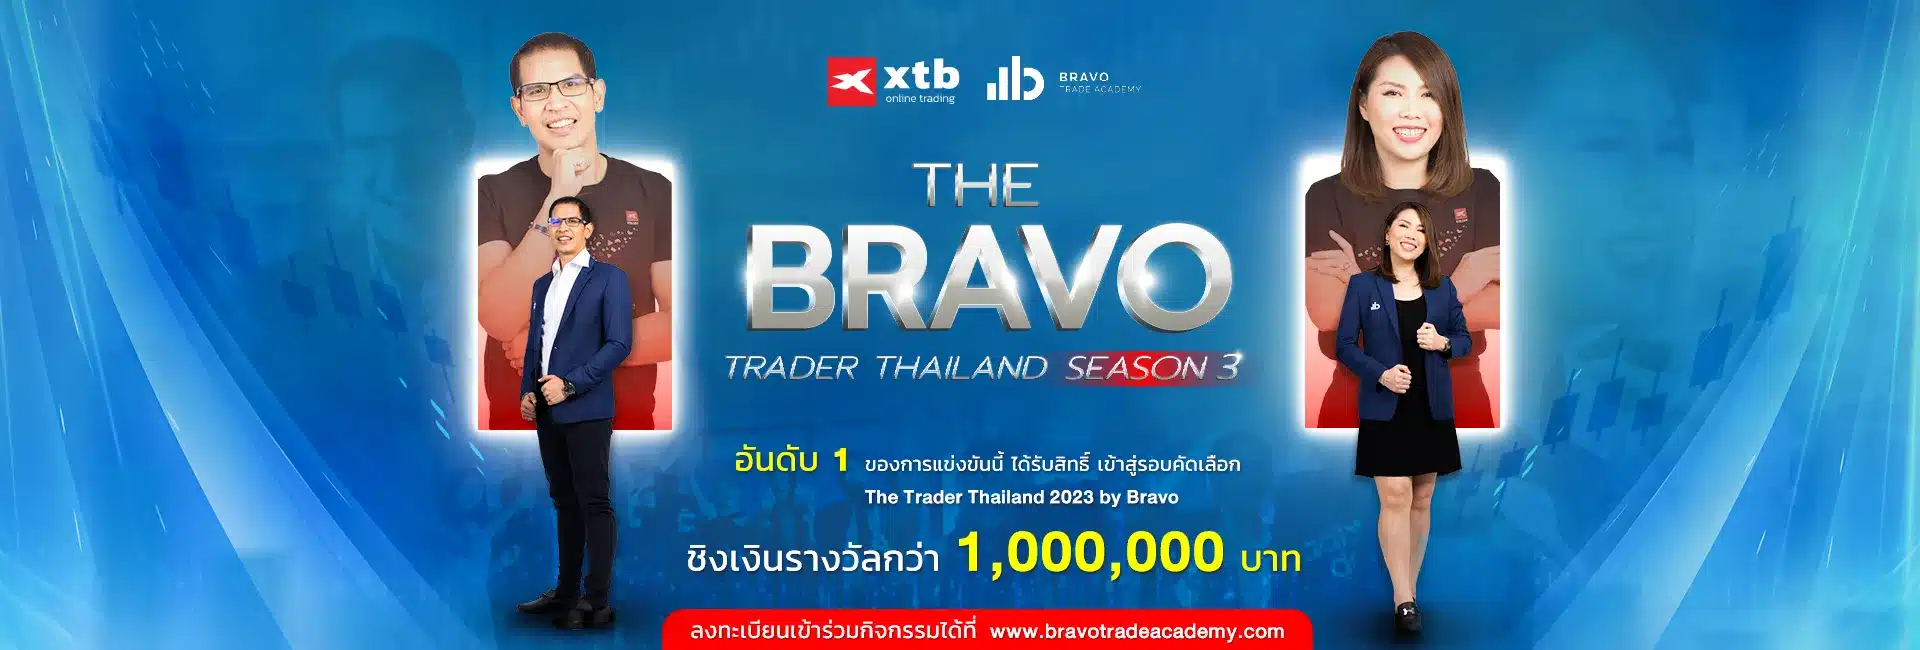 THE BRAVO TRADER THAILAND 2023 Season-3